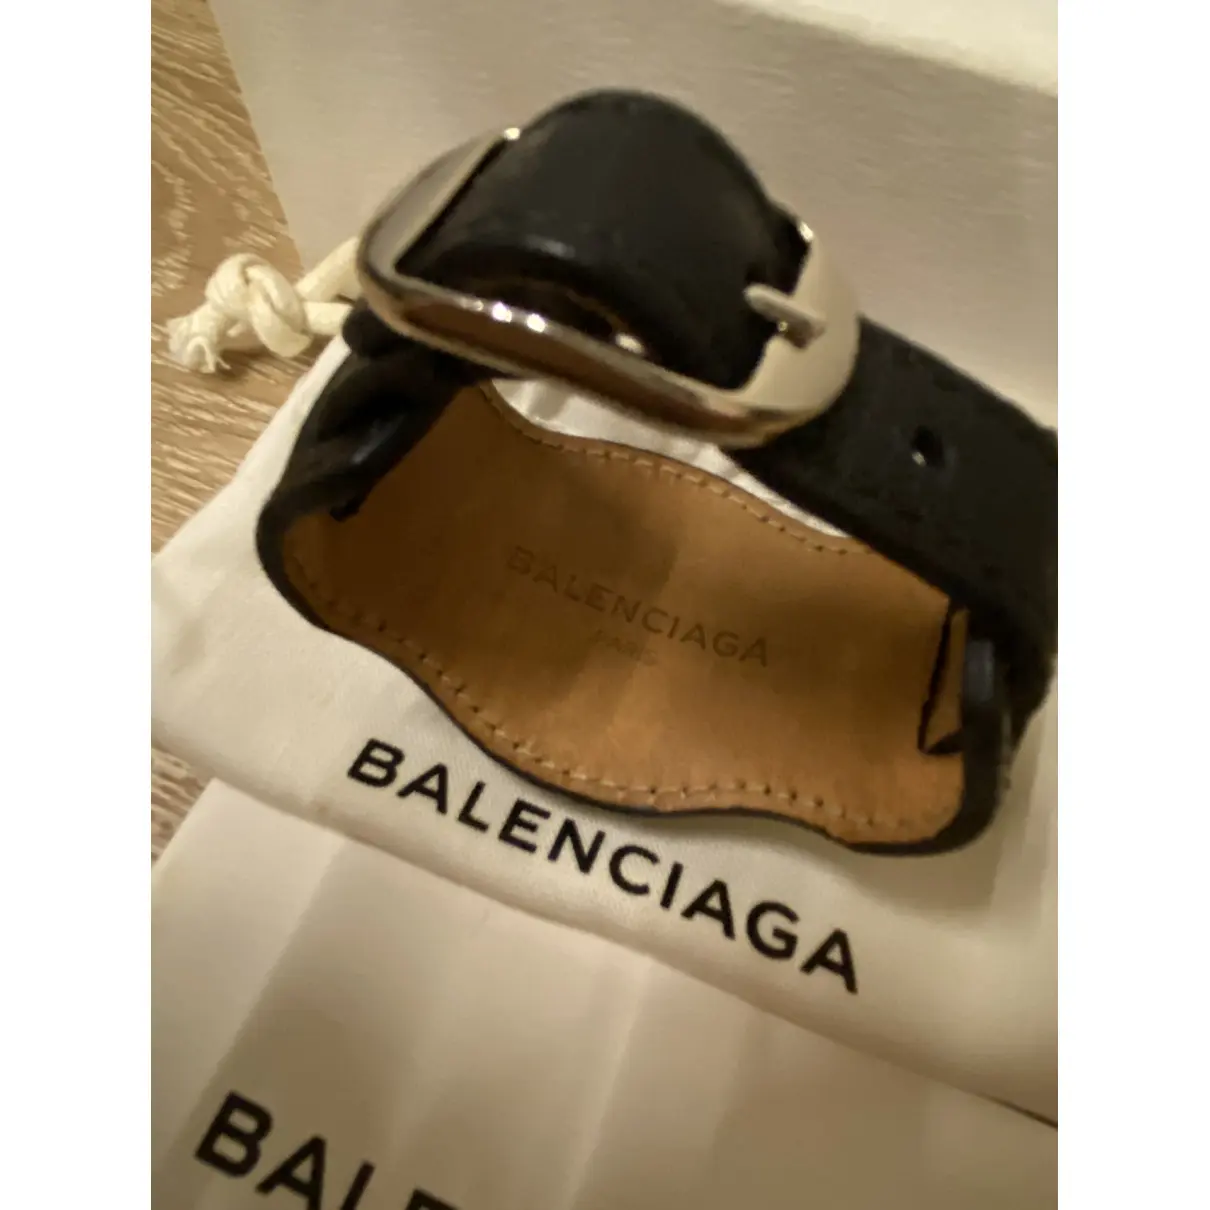 Luxury Balenciaga Bracelets Women